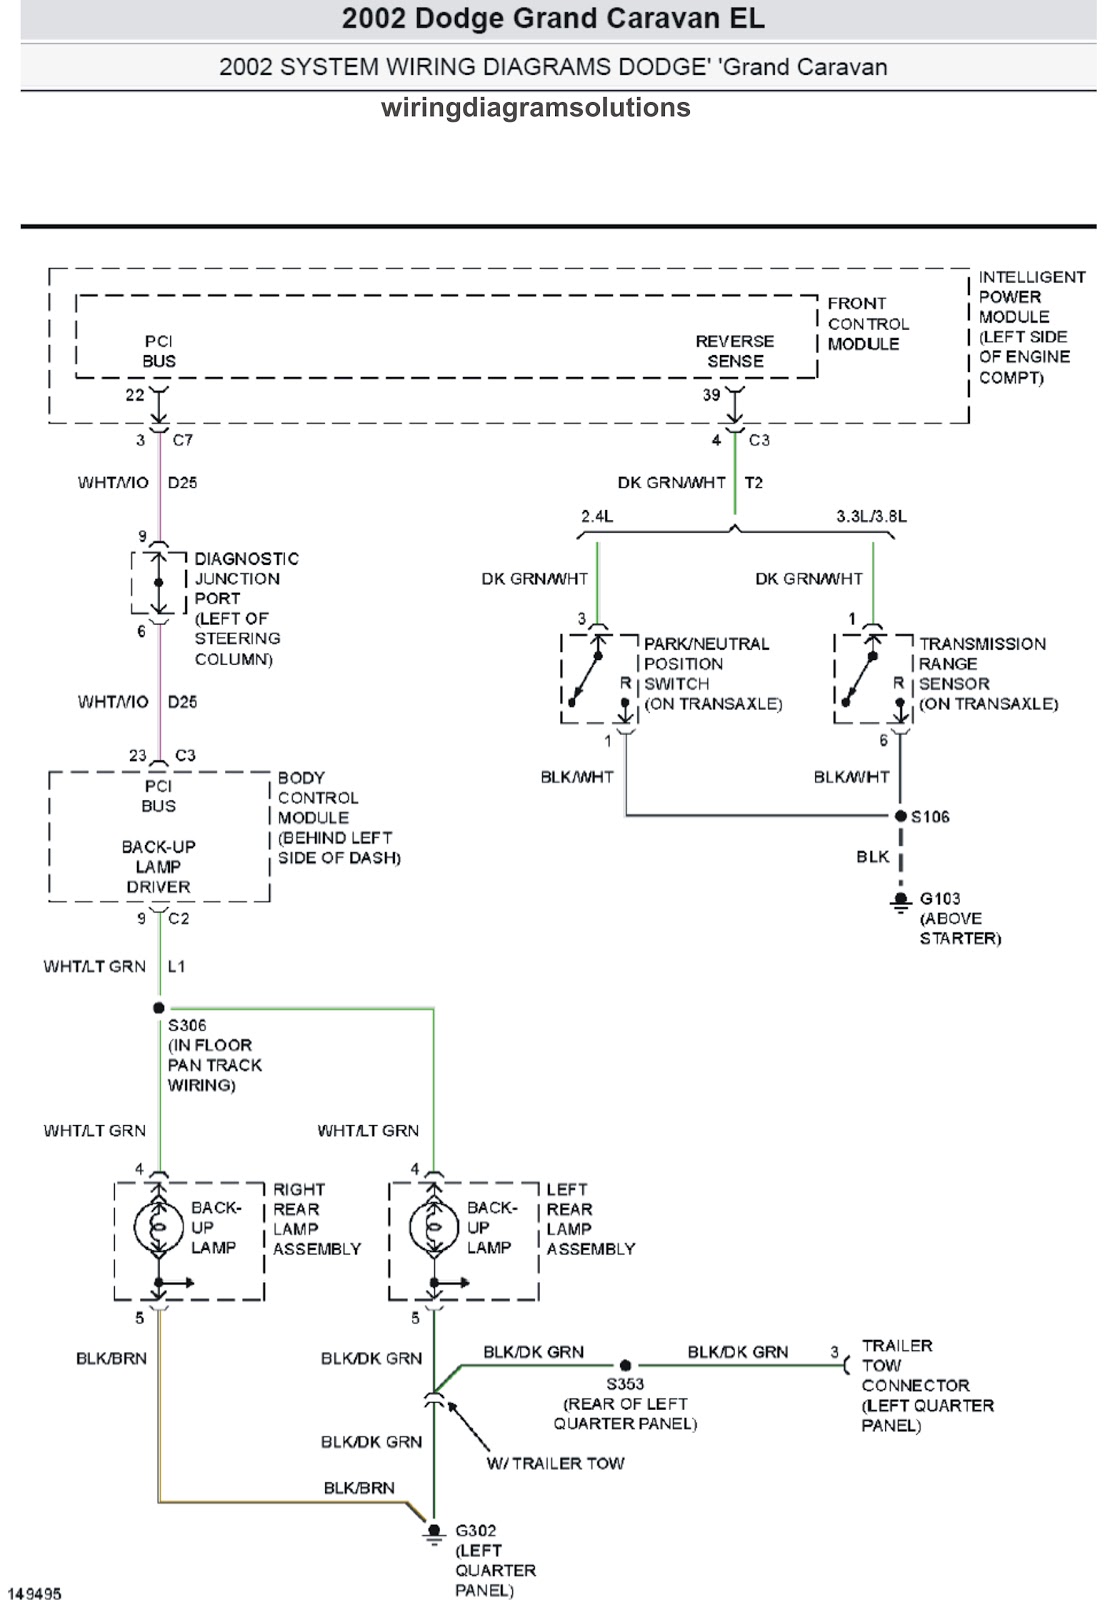 2002 Dodge Grand Caravan EL System Wiring Diagrams ... dodge caravan tranmission wiring schematic 